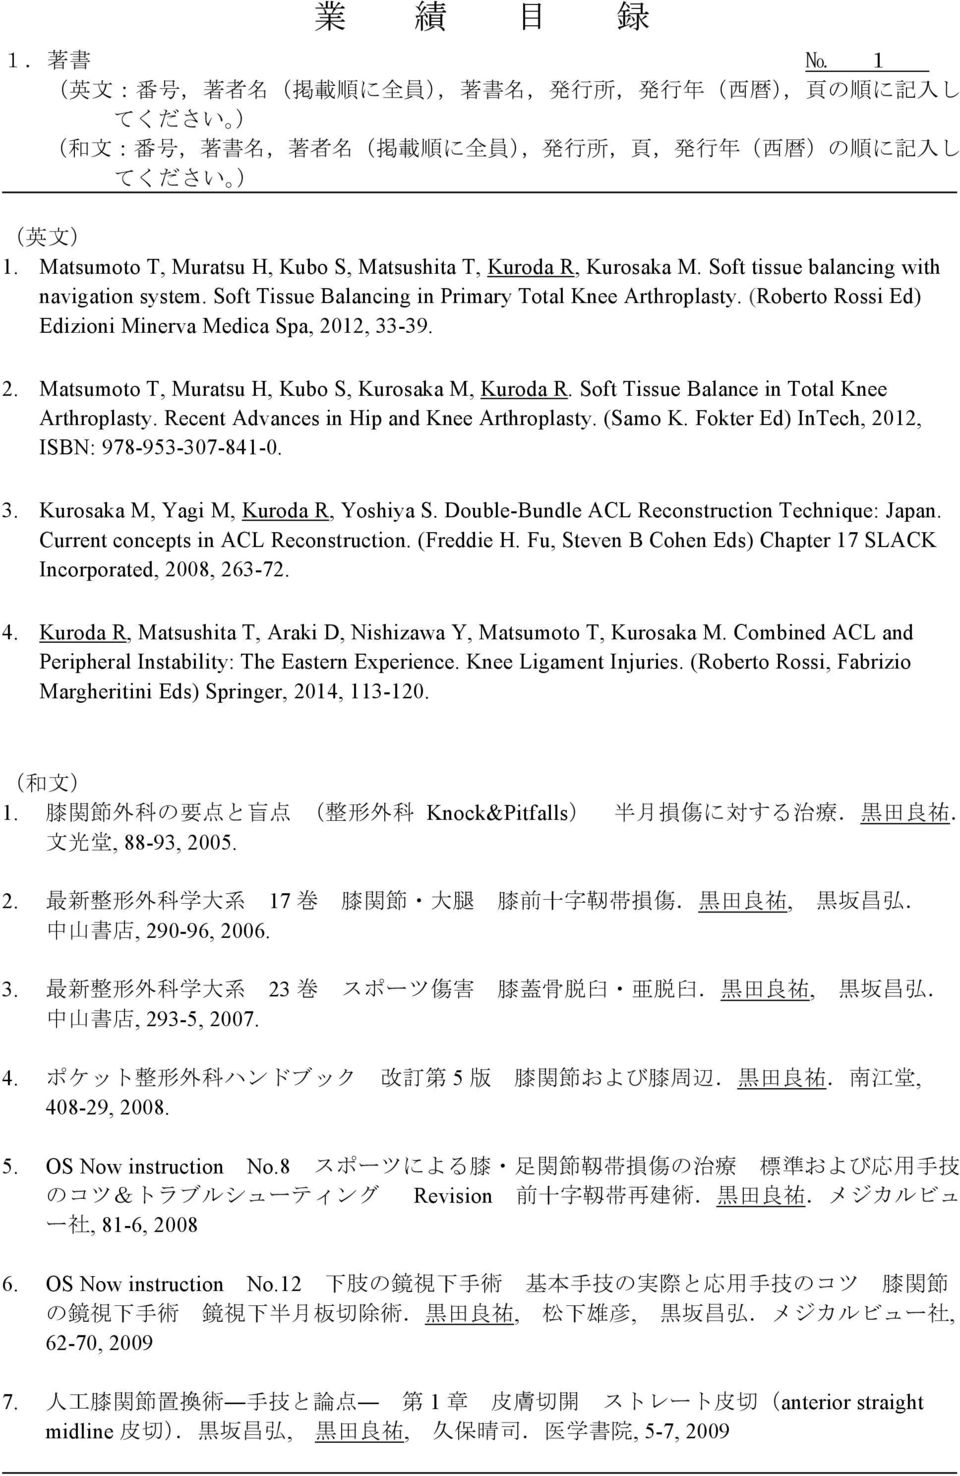 (Roberto Rossi Ed) Edizioni Minerva Medica Spa, 2012, 33-39. 2. Matsumoto T, Muratsu H, Kubo S, Kurosaka M, Kuroda R. Soft Tissue Balance in Total Knee Arthroplasty.